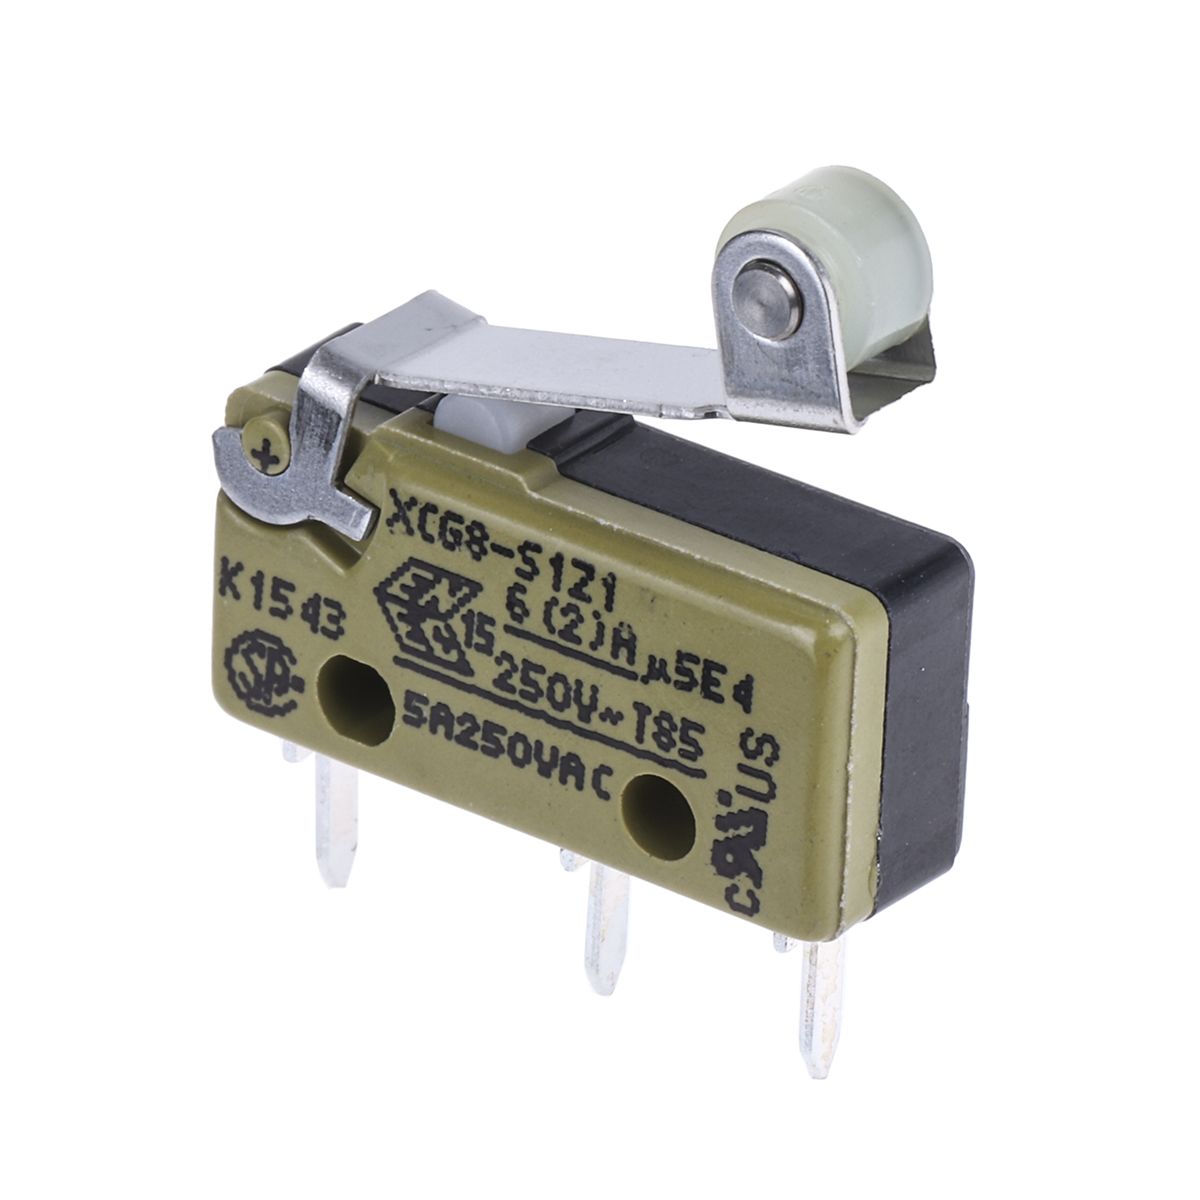 Saia-Burgess Roller Lever Micro Switch, PCB Terminal, 6 A @ 250 V ac, NO/NC, IP40